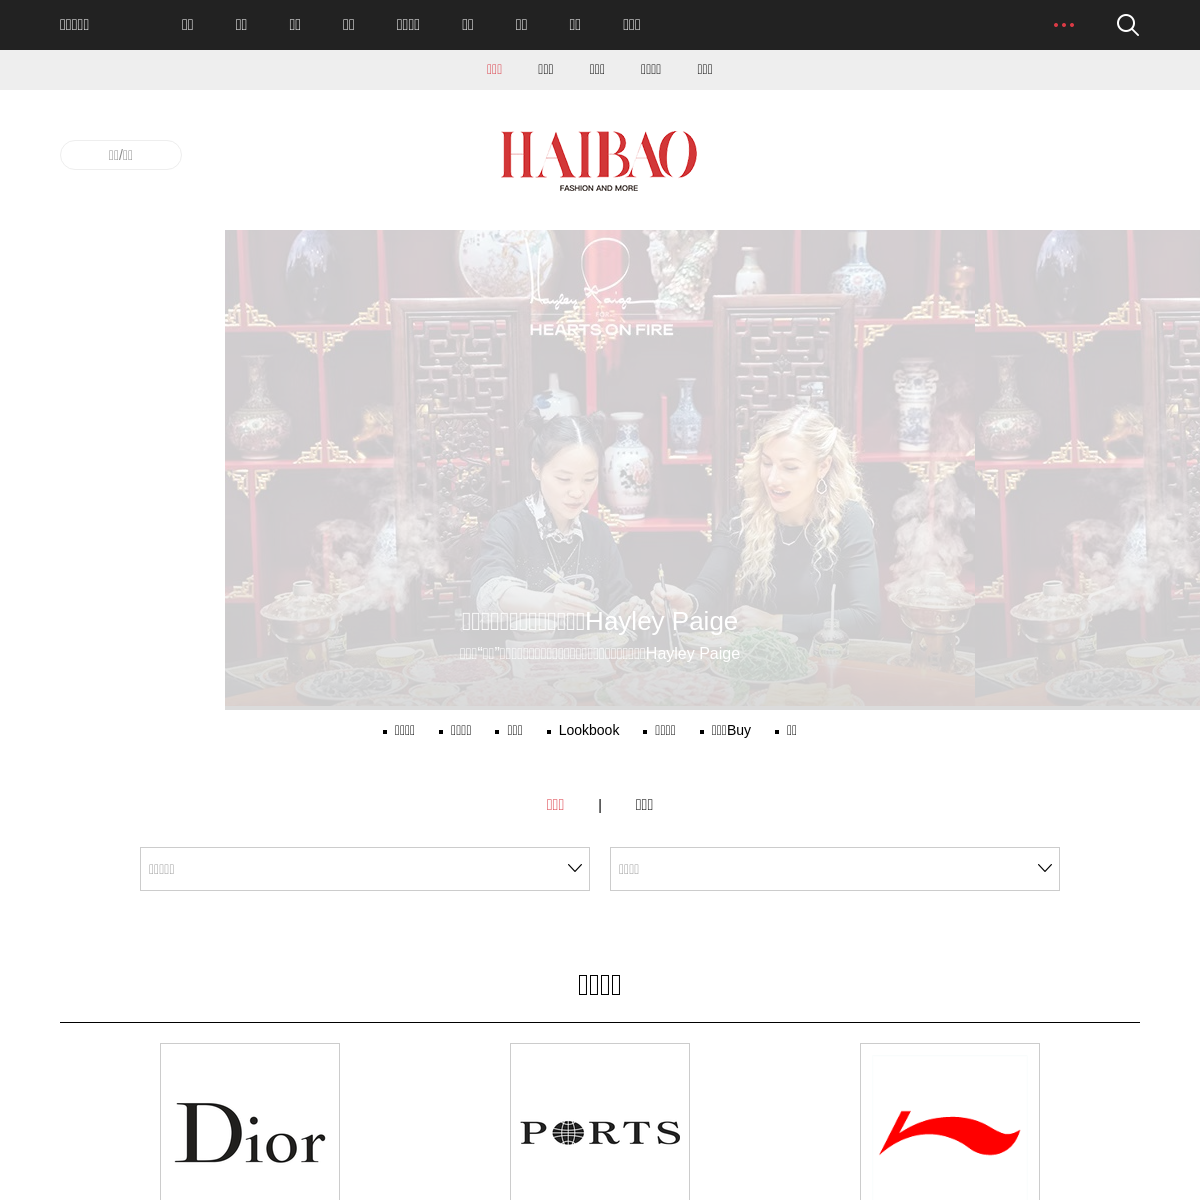 A complete backup of brands.haibao.com